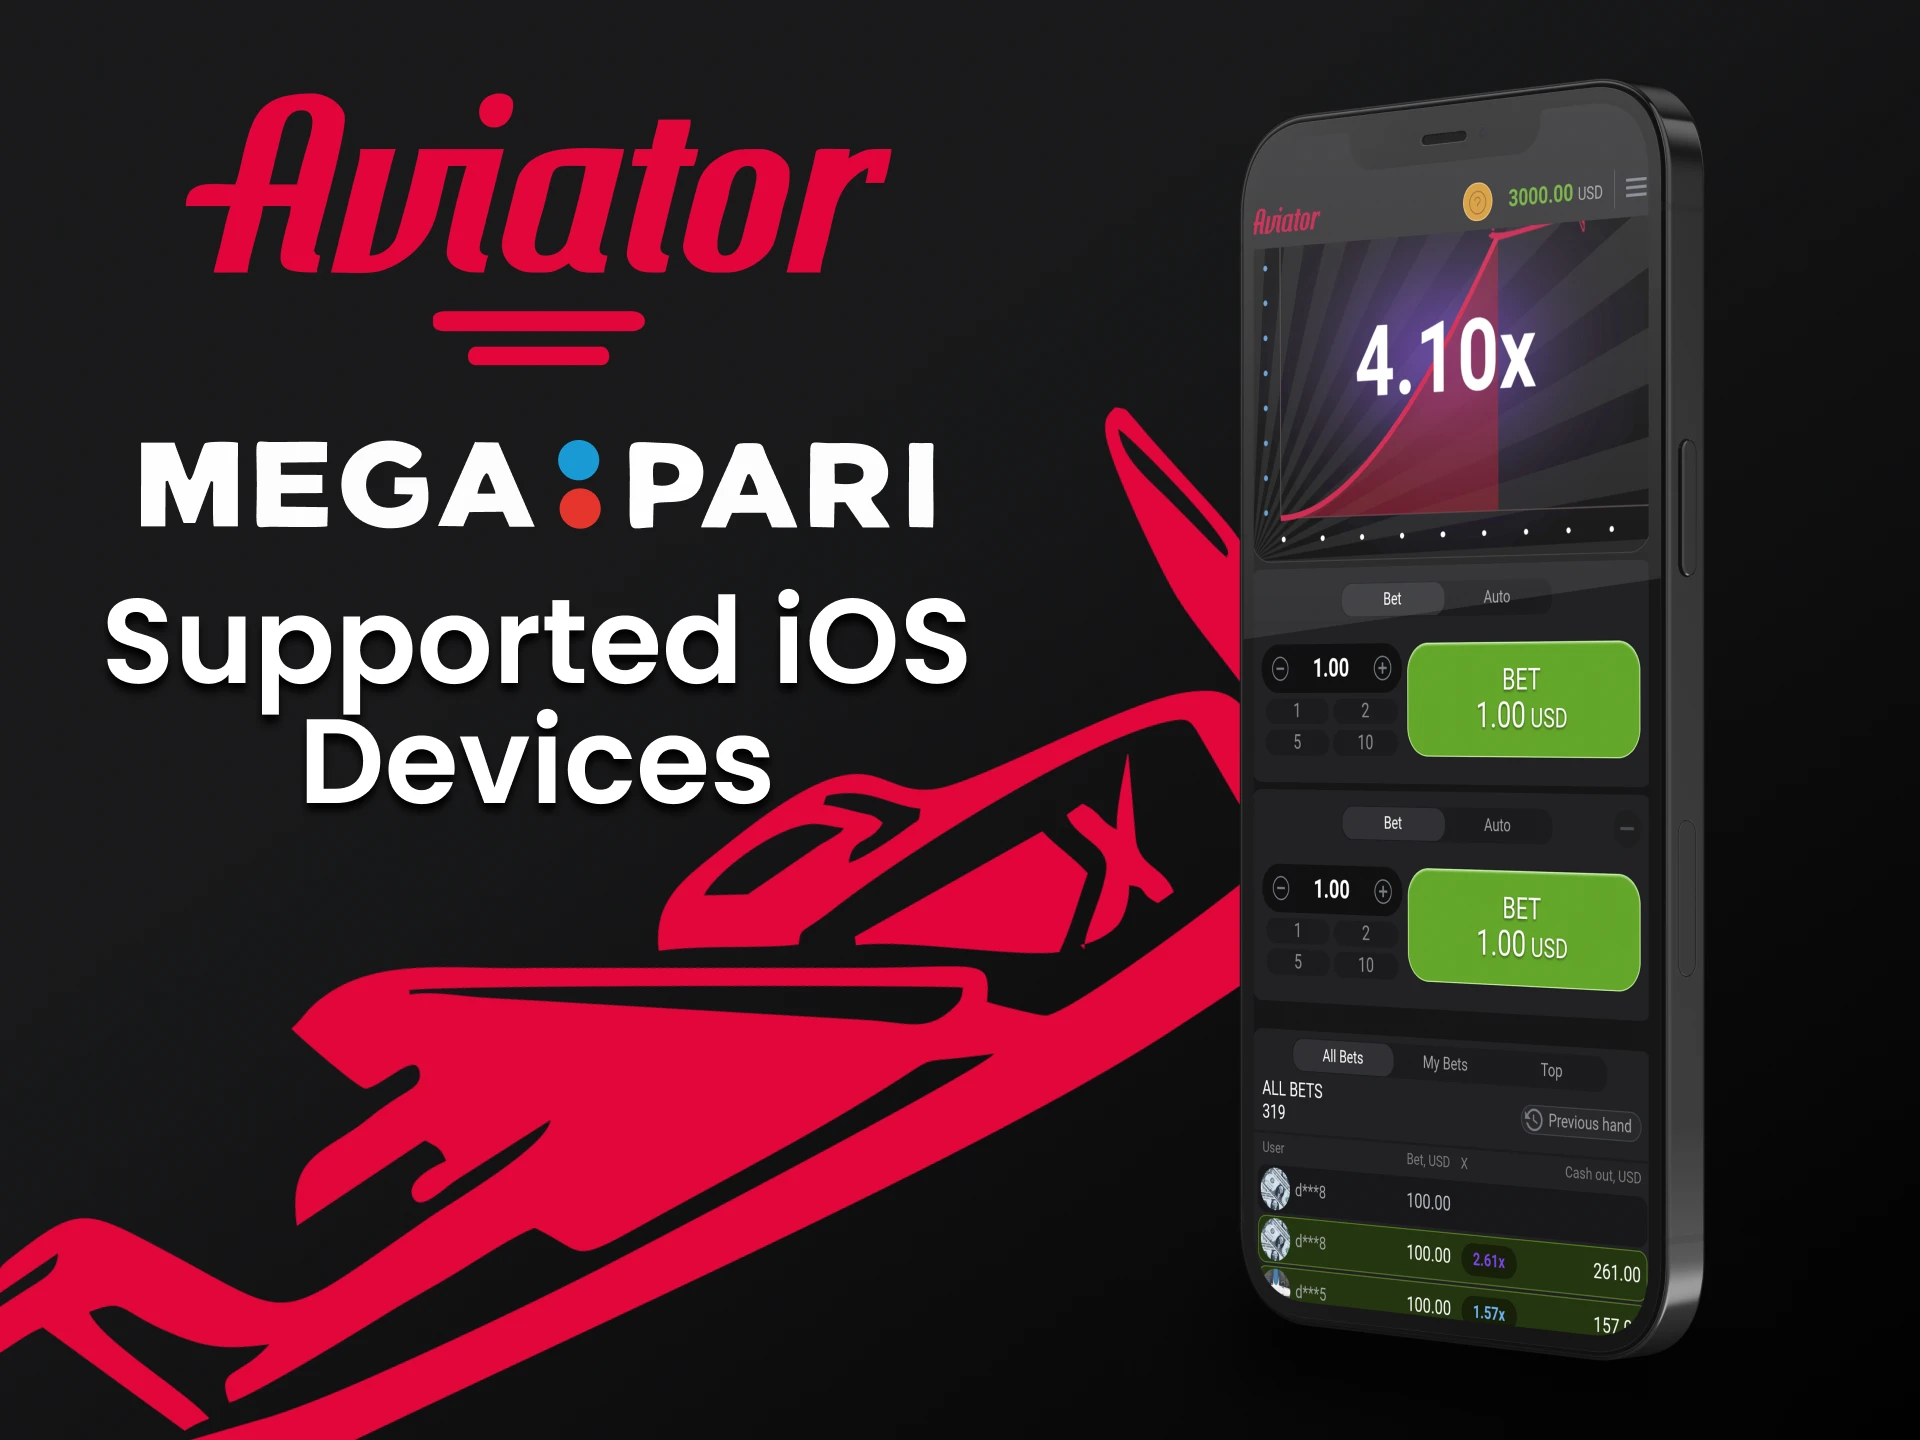 To play Aviator, use the Megapari app for iOS.